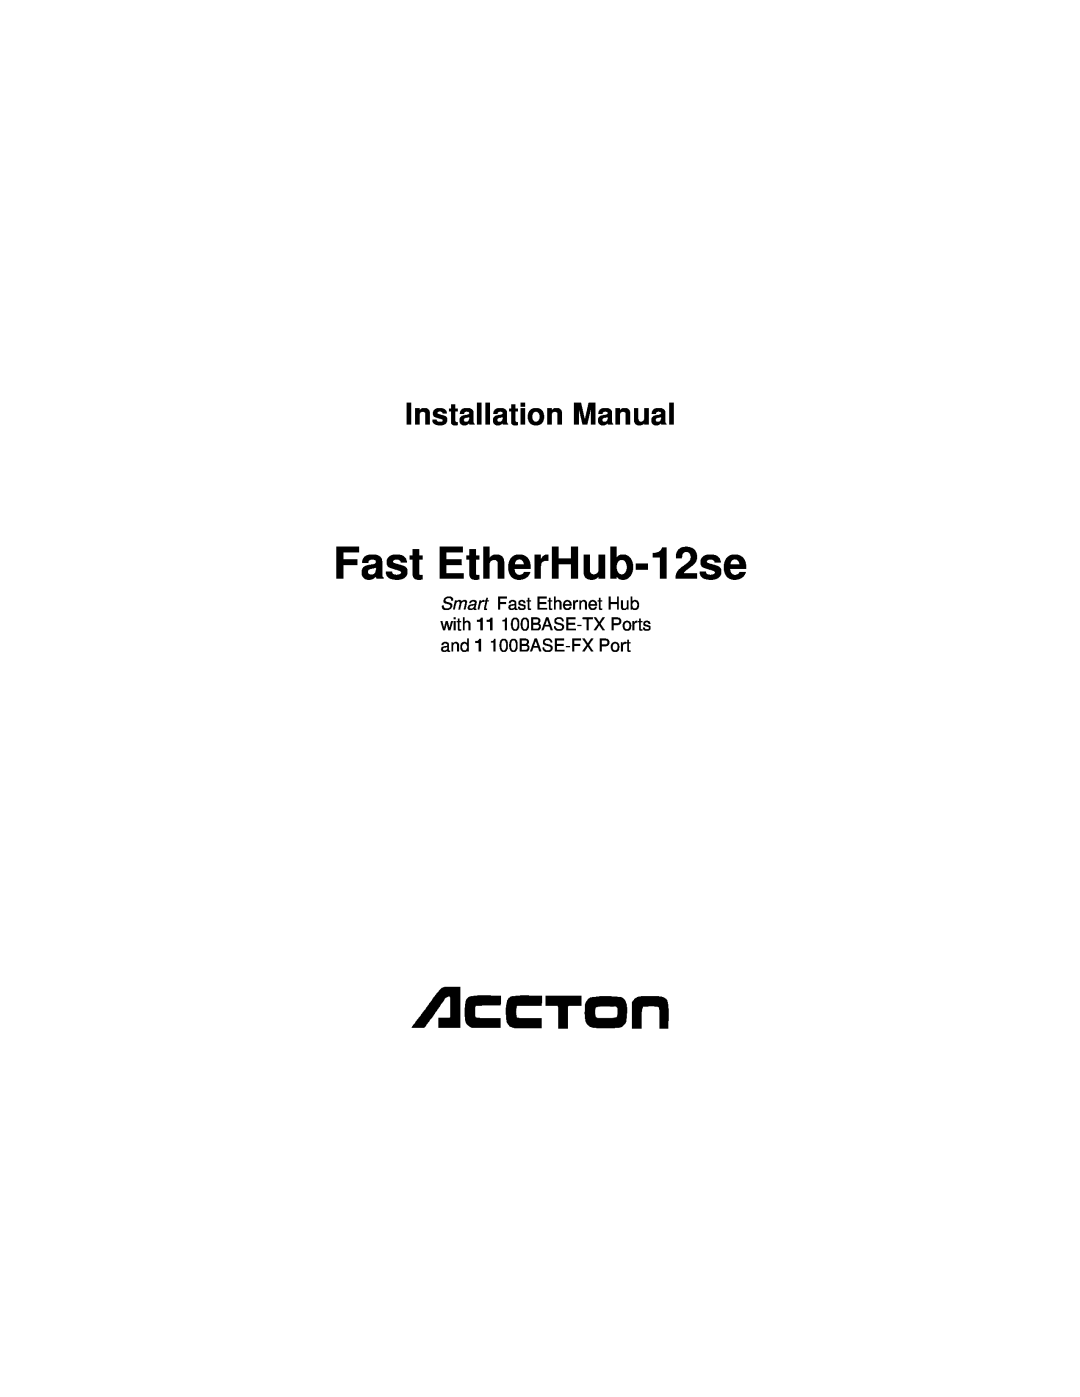 Accton Technology manual Fast EtherHub-12se, Installation Manual 